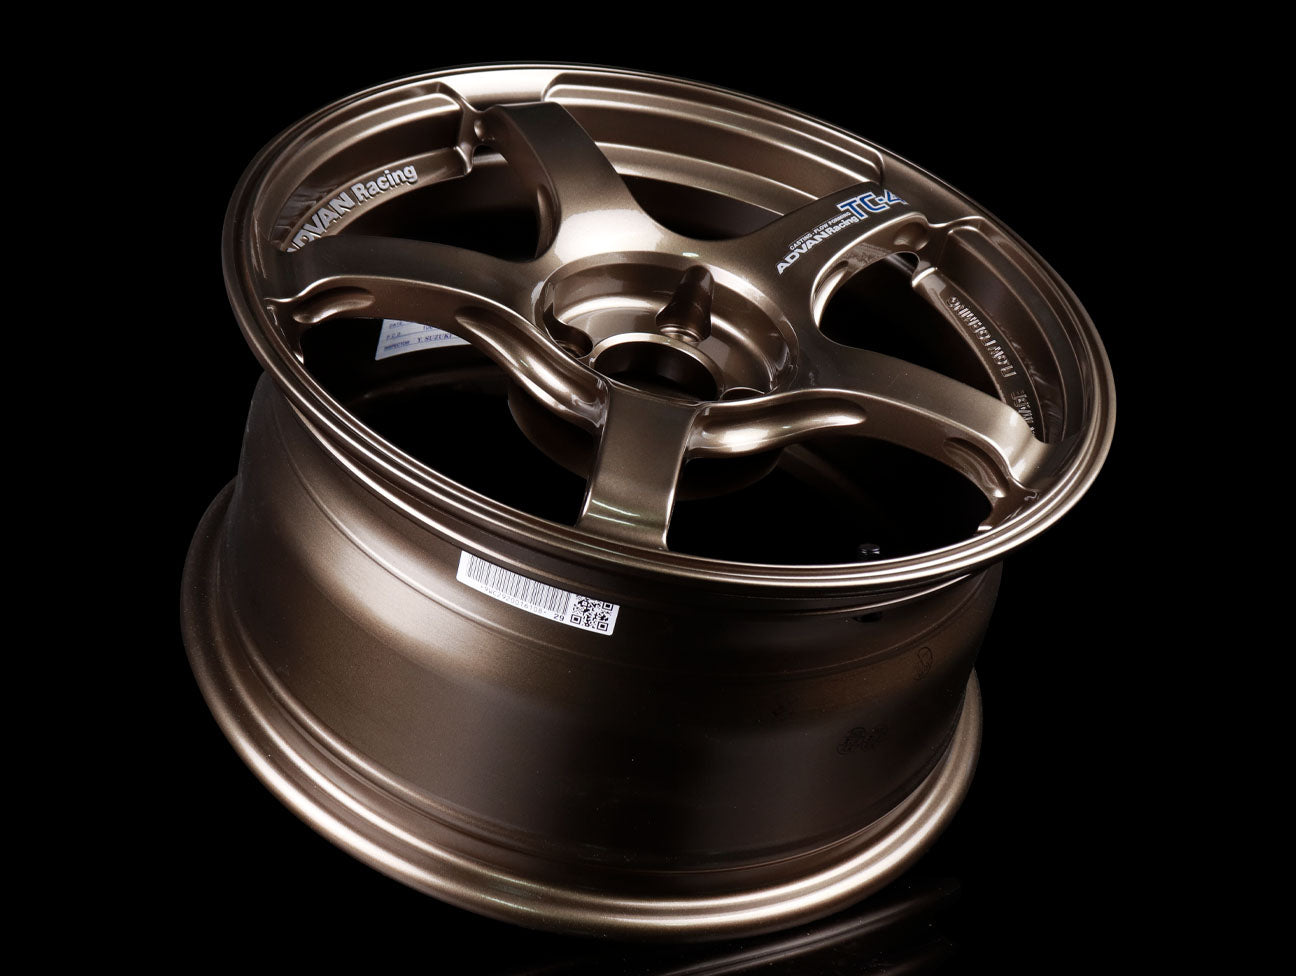 Advan Racing TC4 Wheels - Umber Bronze / 16x8 / 4x100 / +38